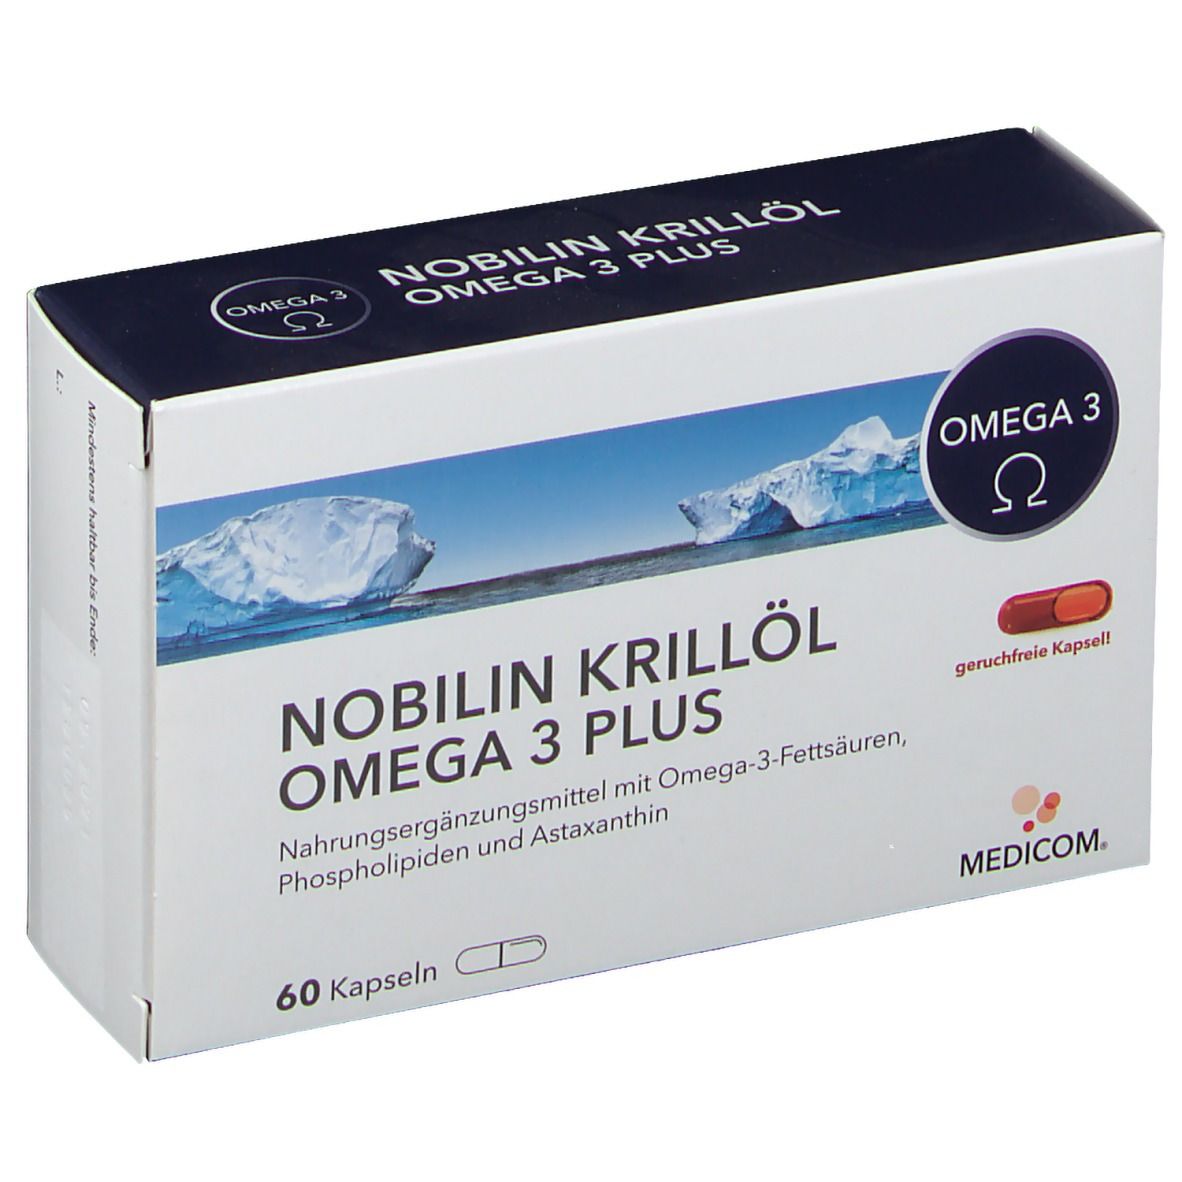 Nobilin Krillöl Omega-3 Plus